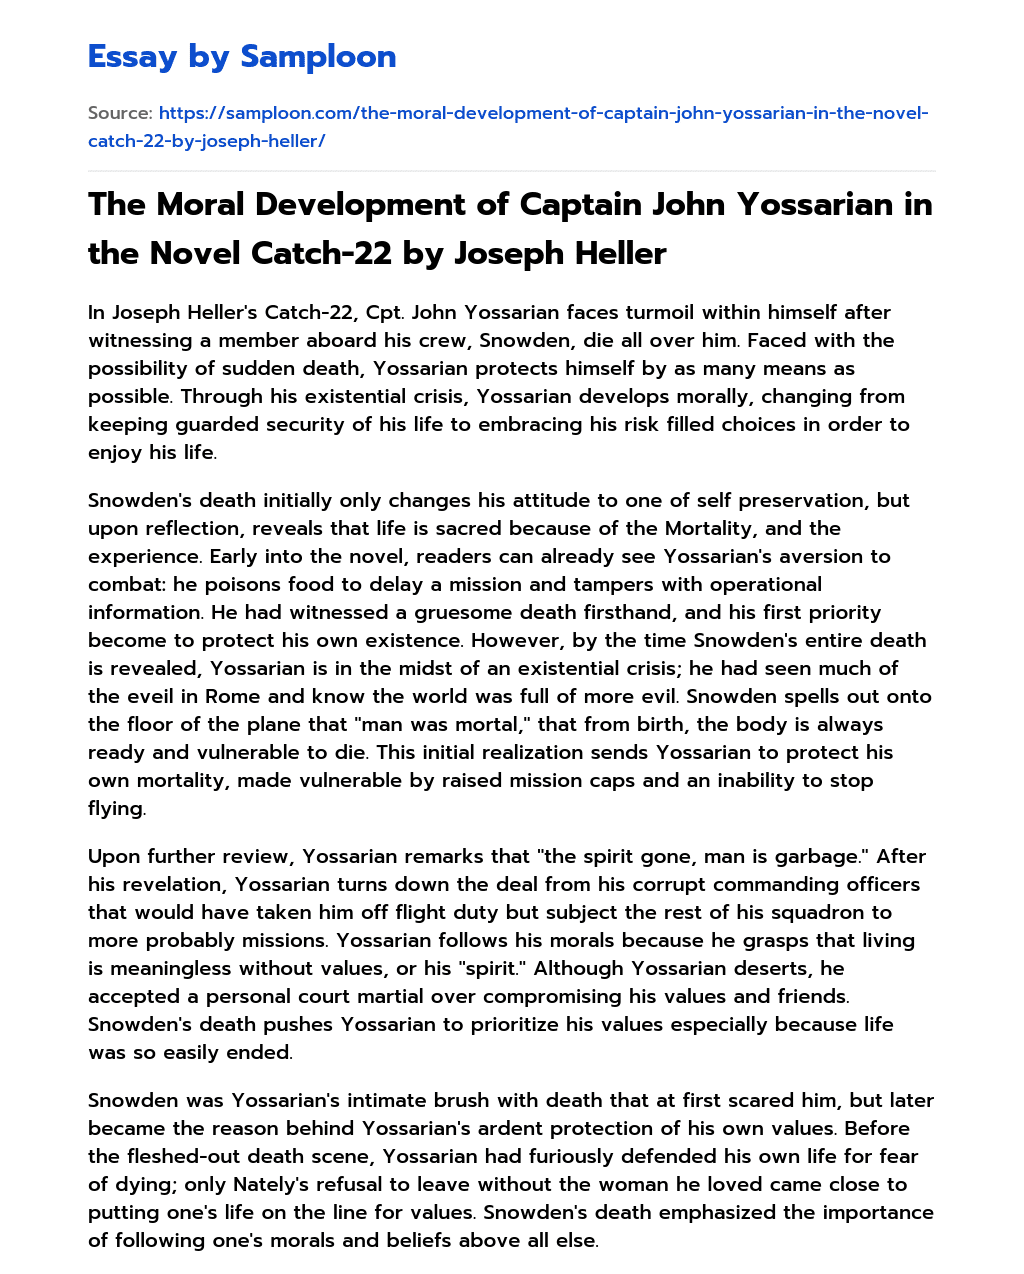 The Moral Development of Captain John Yossarian in the Novel Catch-22 by Joseph Heller essay